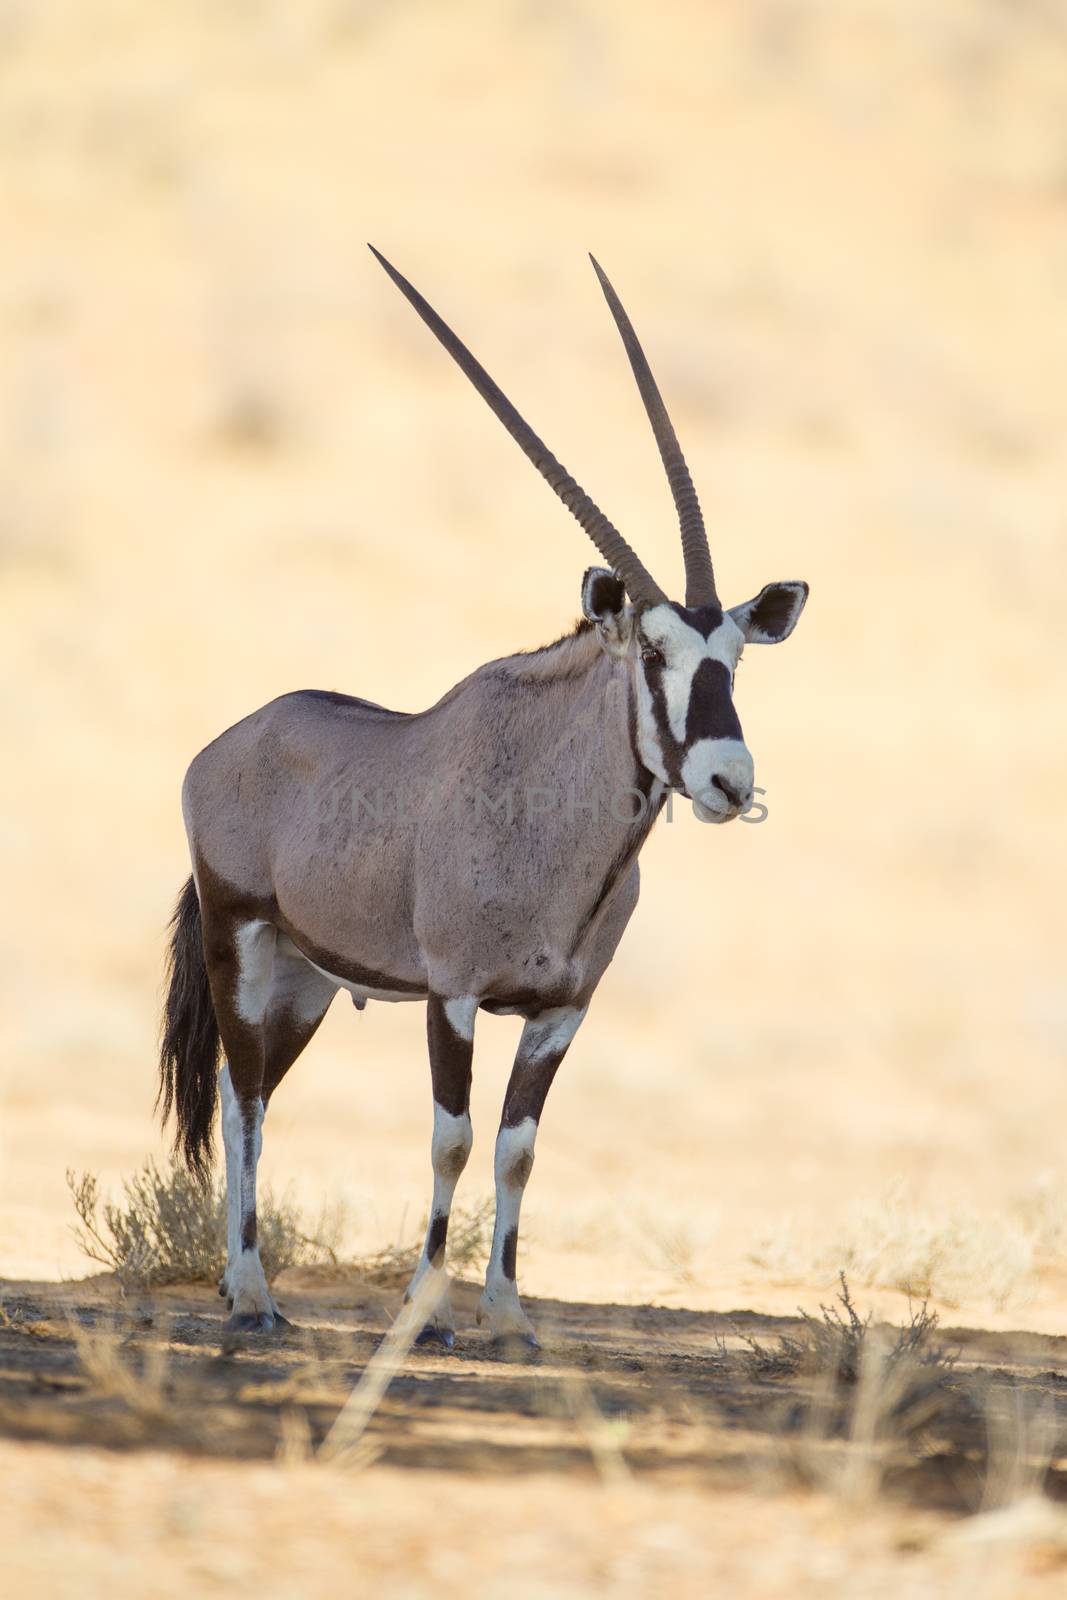 Oryx gemsbok in the wilderness by ozkanzozmen